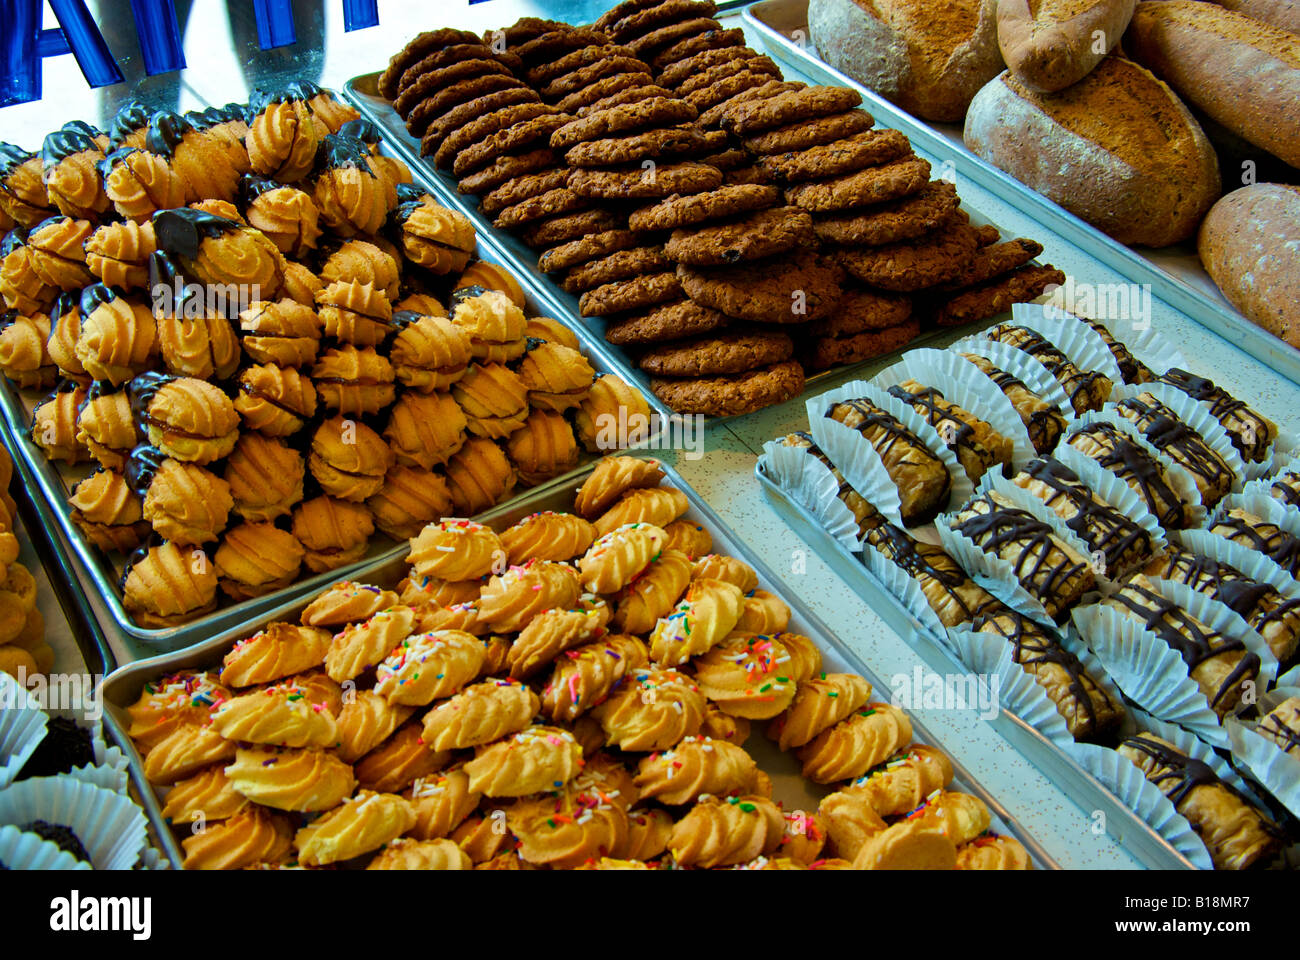 [Image: display-of-fancy-cookies-and-breads-in-t...B18MR7.jpg]